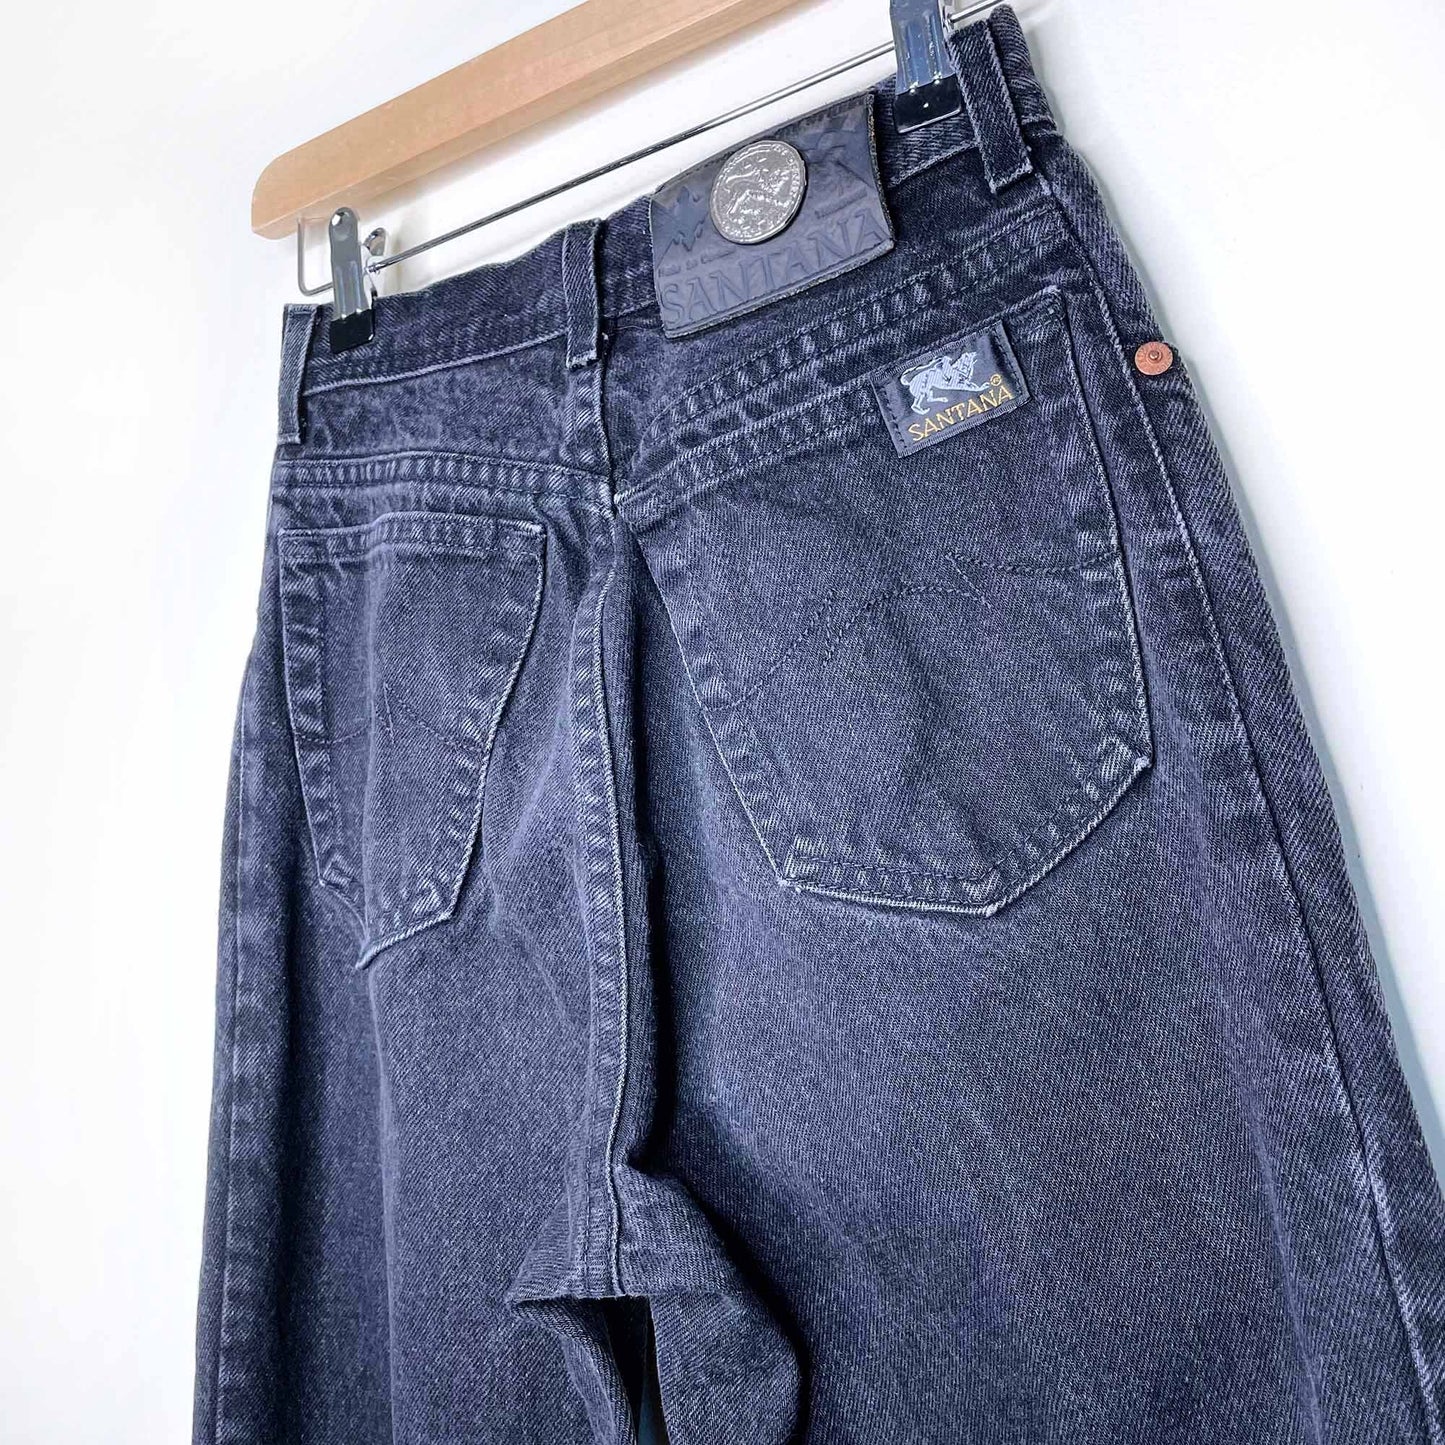 vintage santana parasuco slim high rise jeans - size 28 (24)